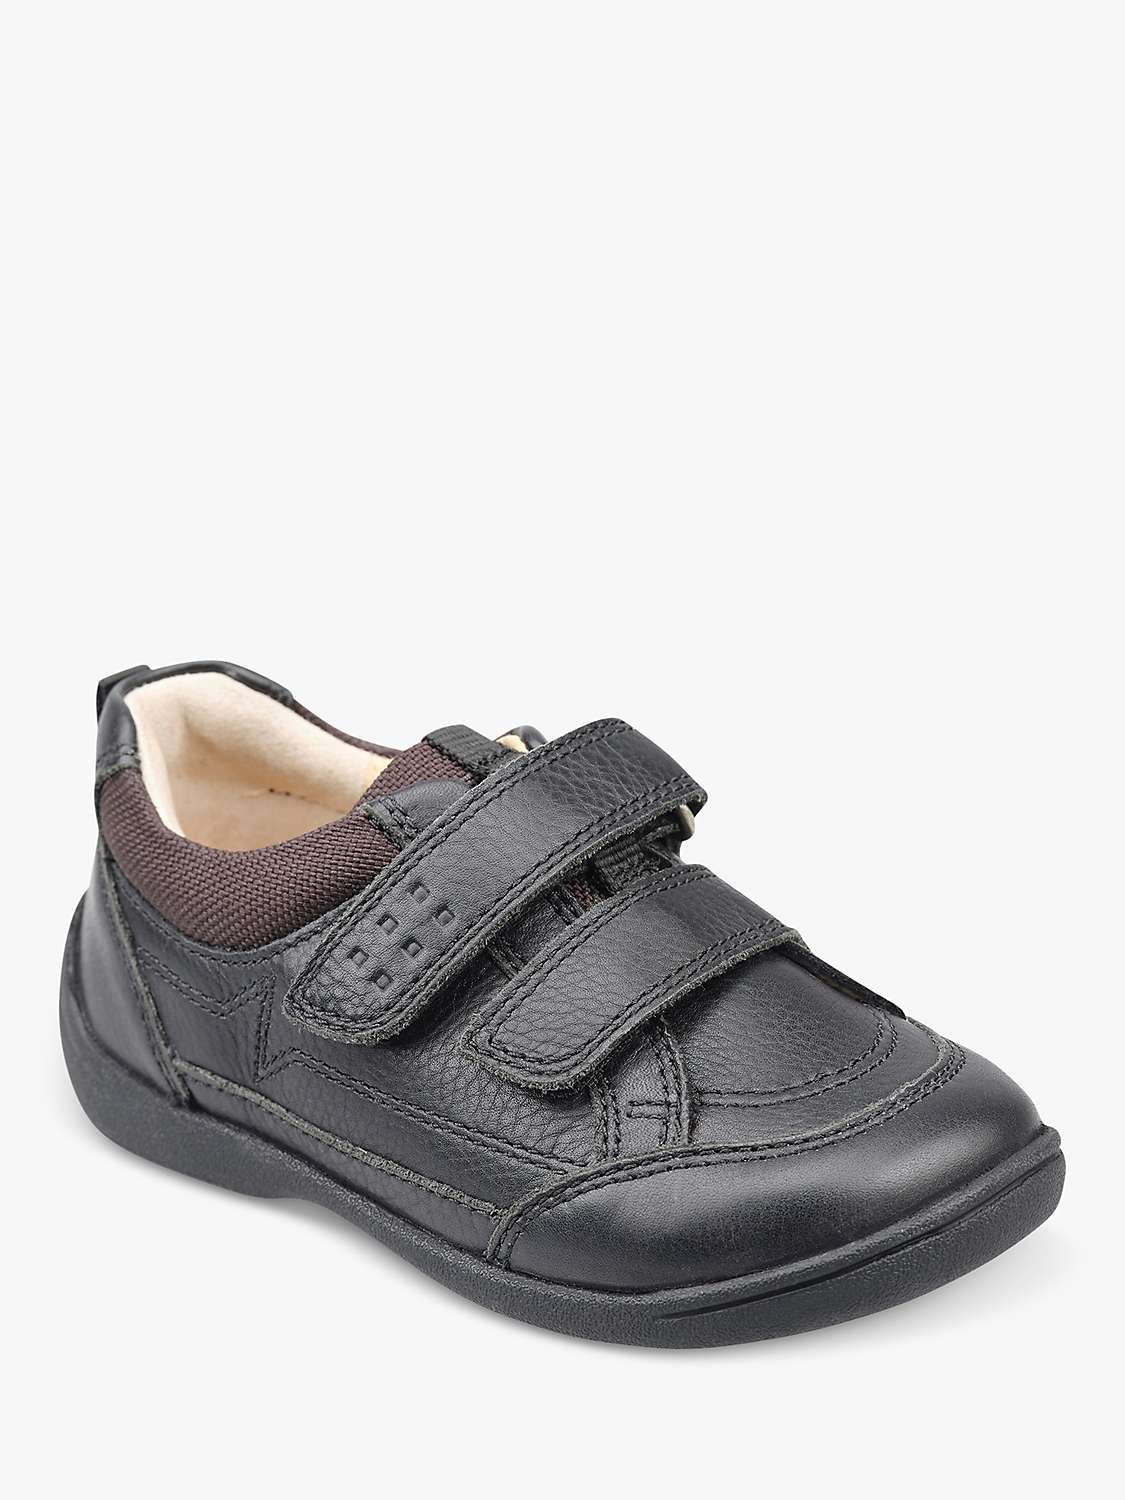 Buy Start-Rite Kids' Zigzag Leather School Shoes, Black Online at johnlewis.com